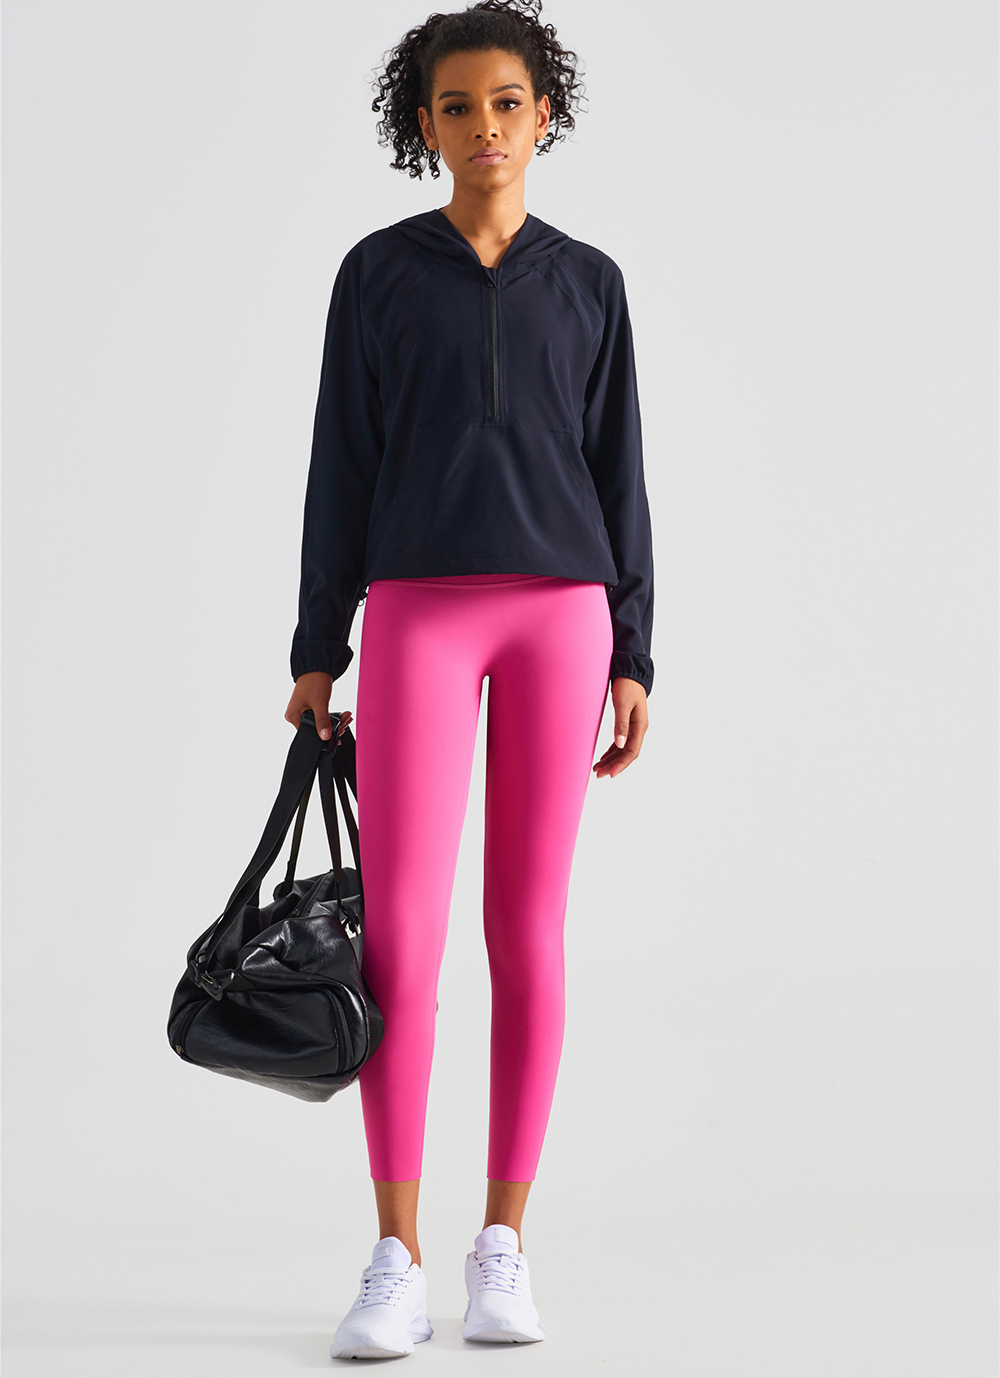 Hergymclothing cropped zip up workout jacket black and pink comfortable yoga leggings